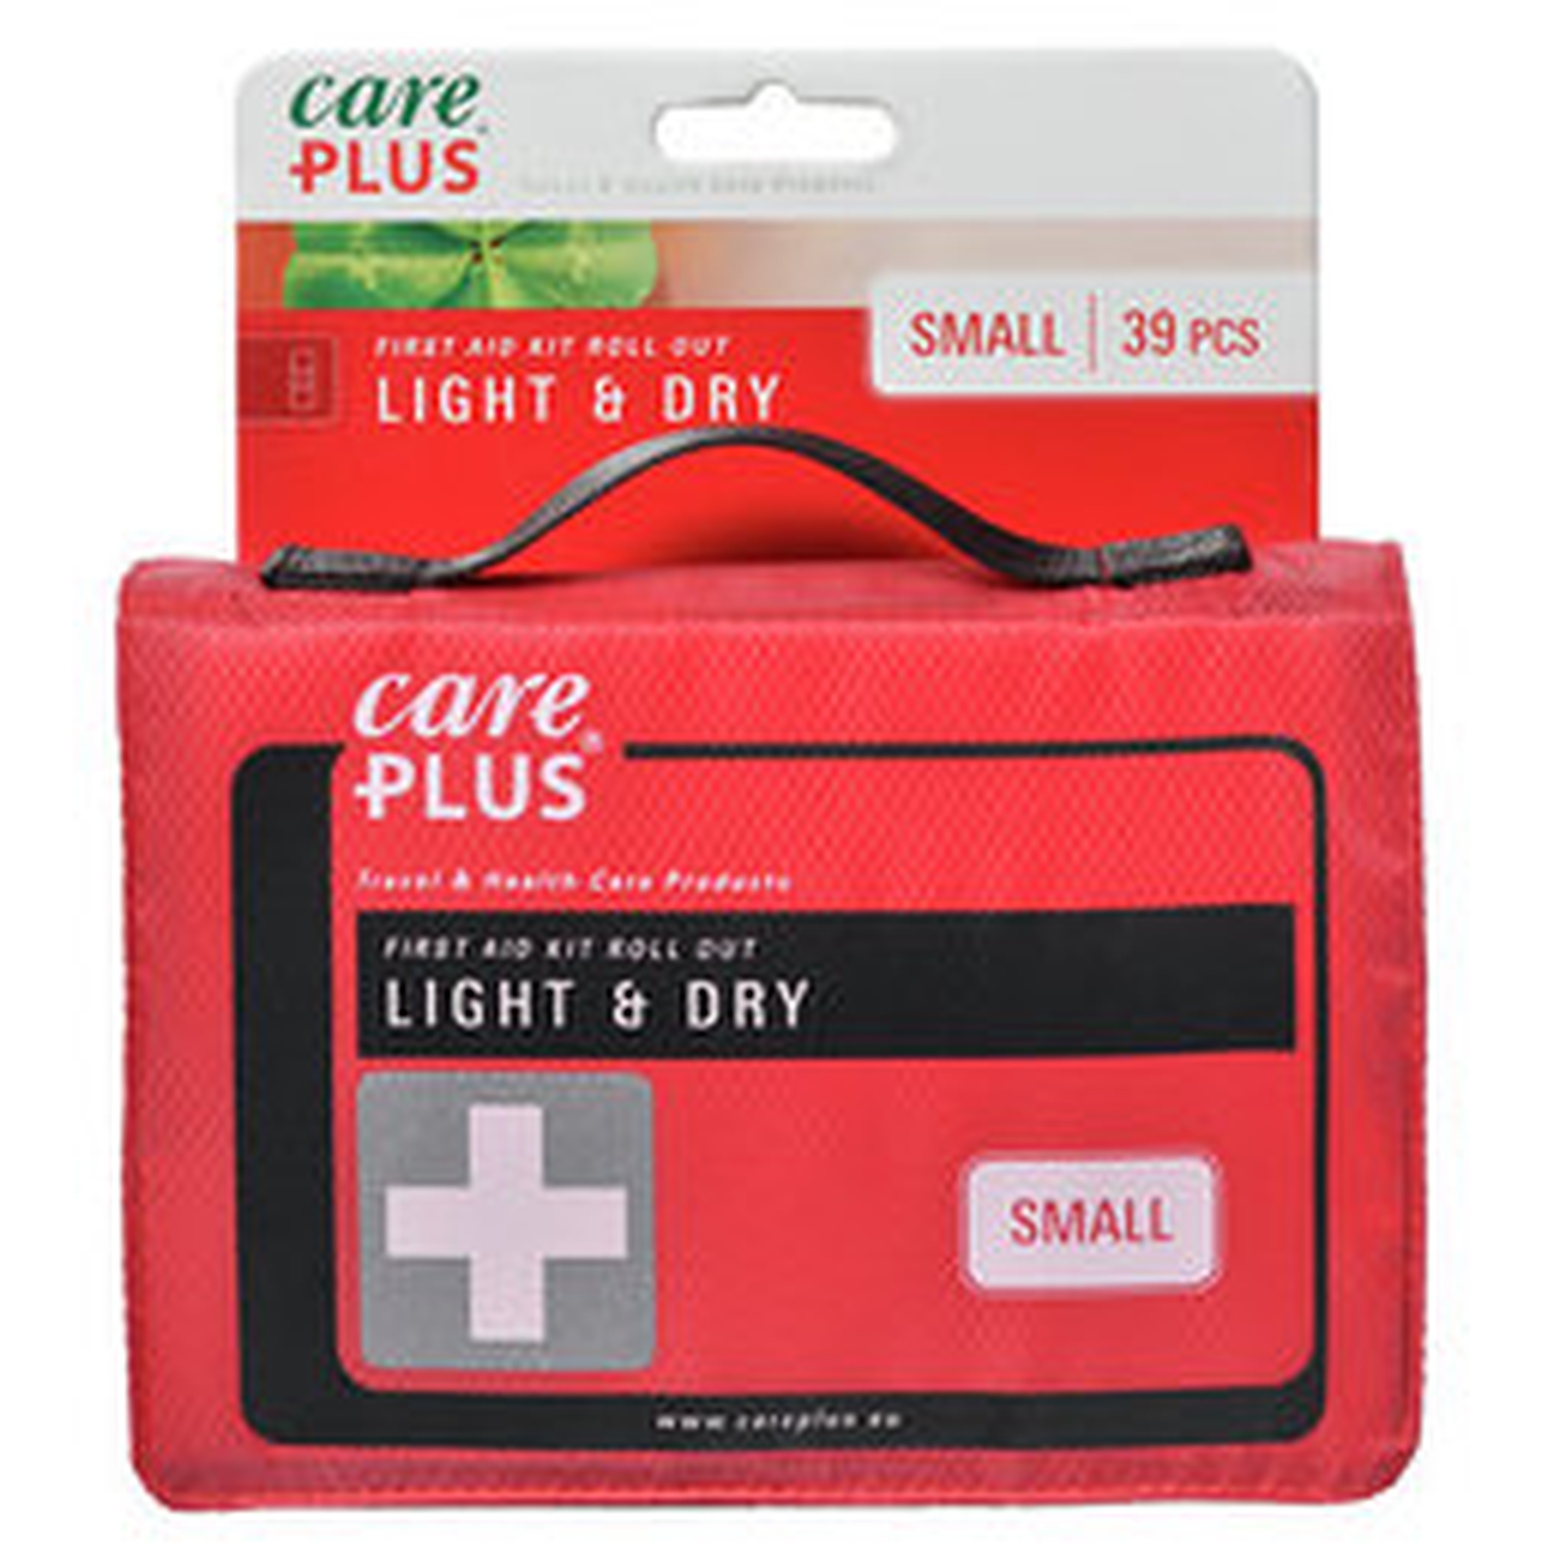 Produktbild von Care Plus Erste Hilfe Kit Roll Out - Light &amp; Dry Small